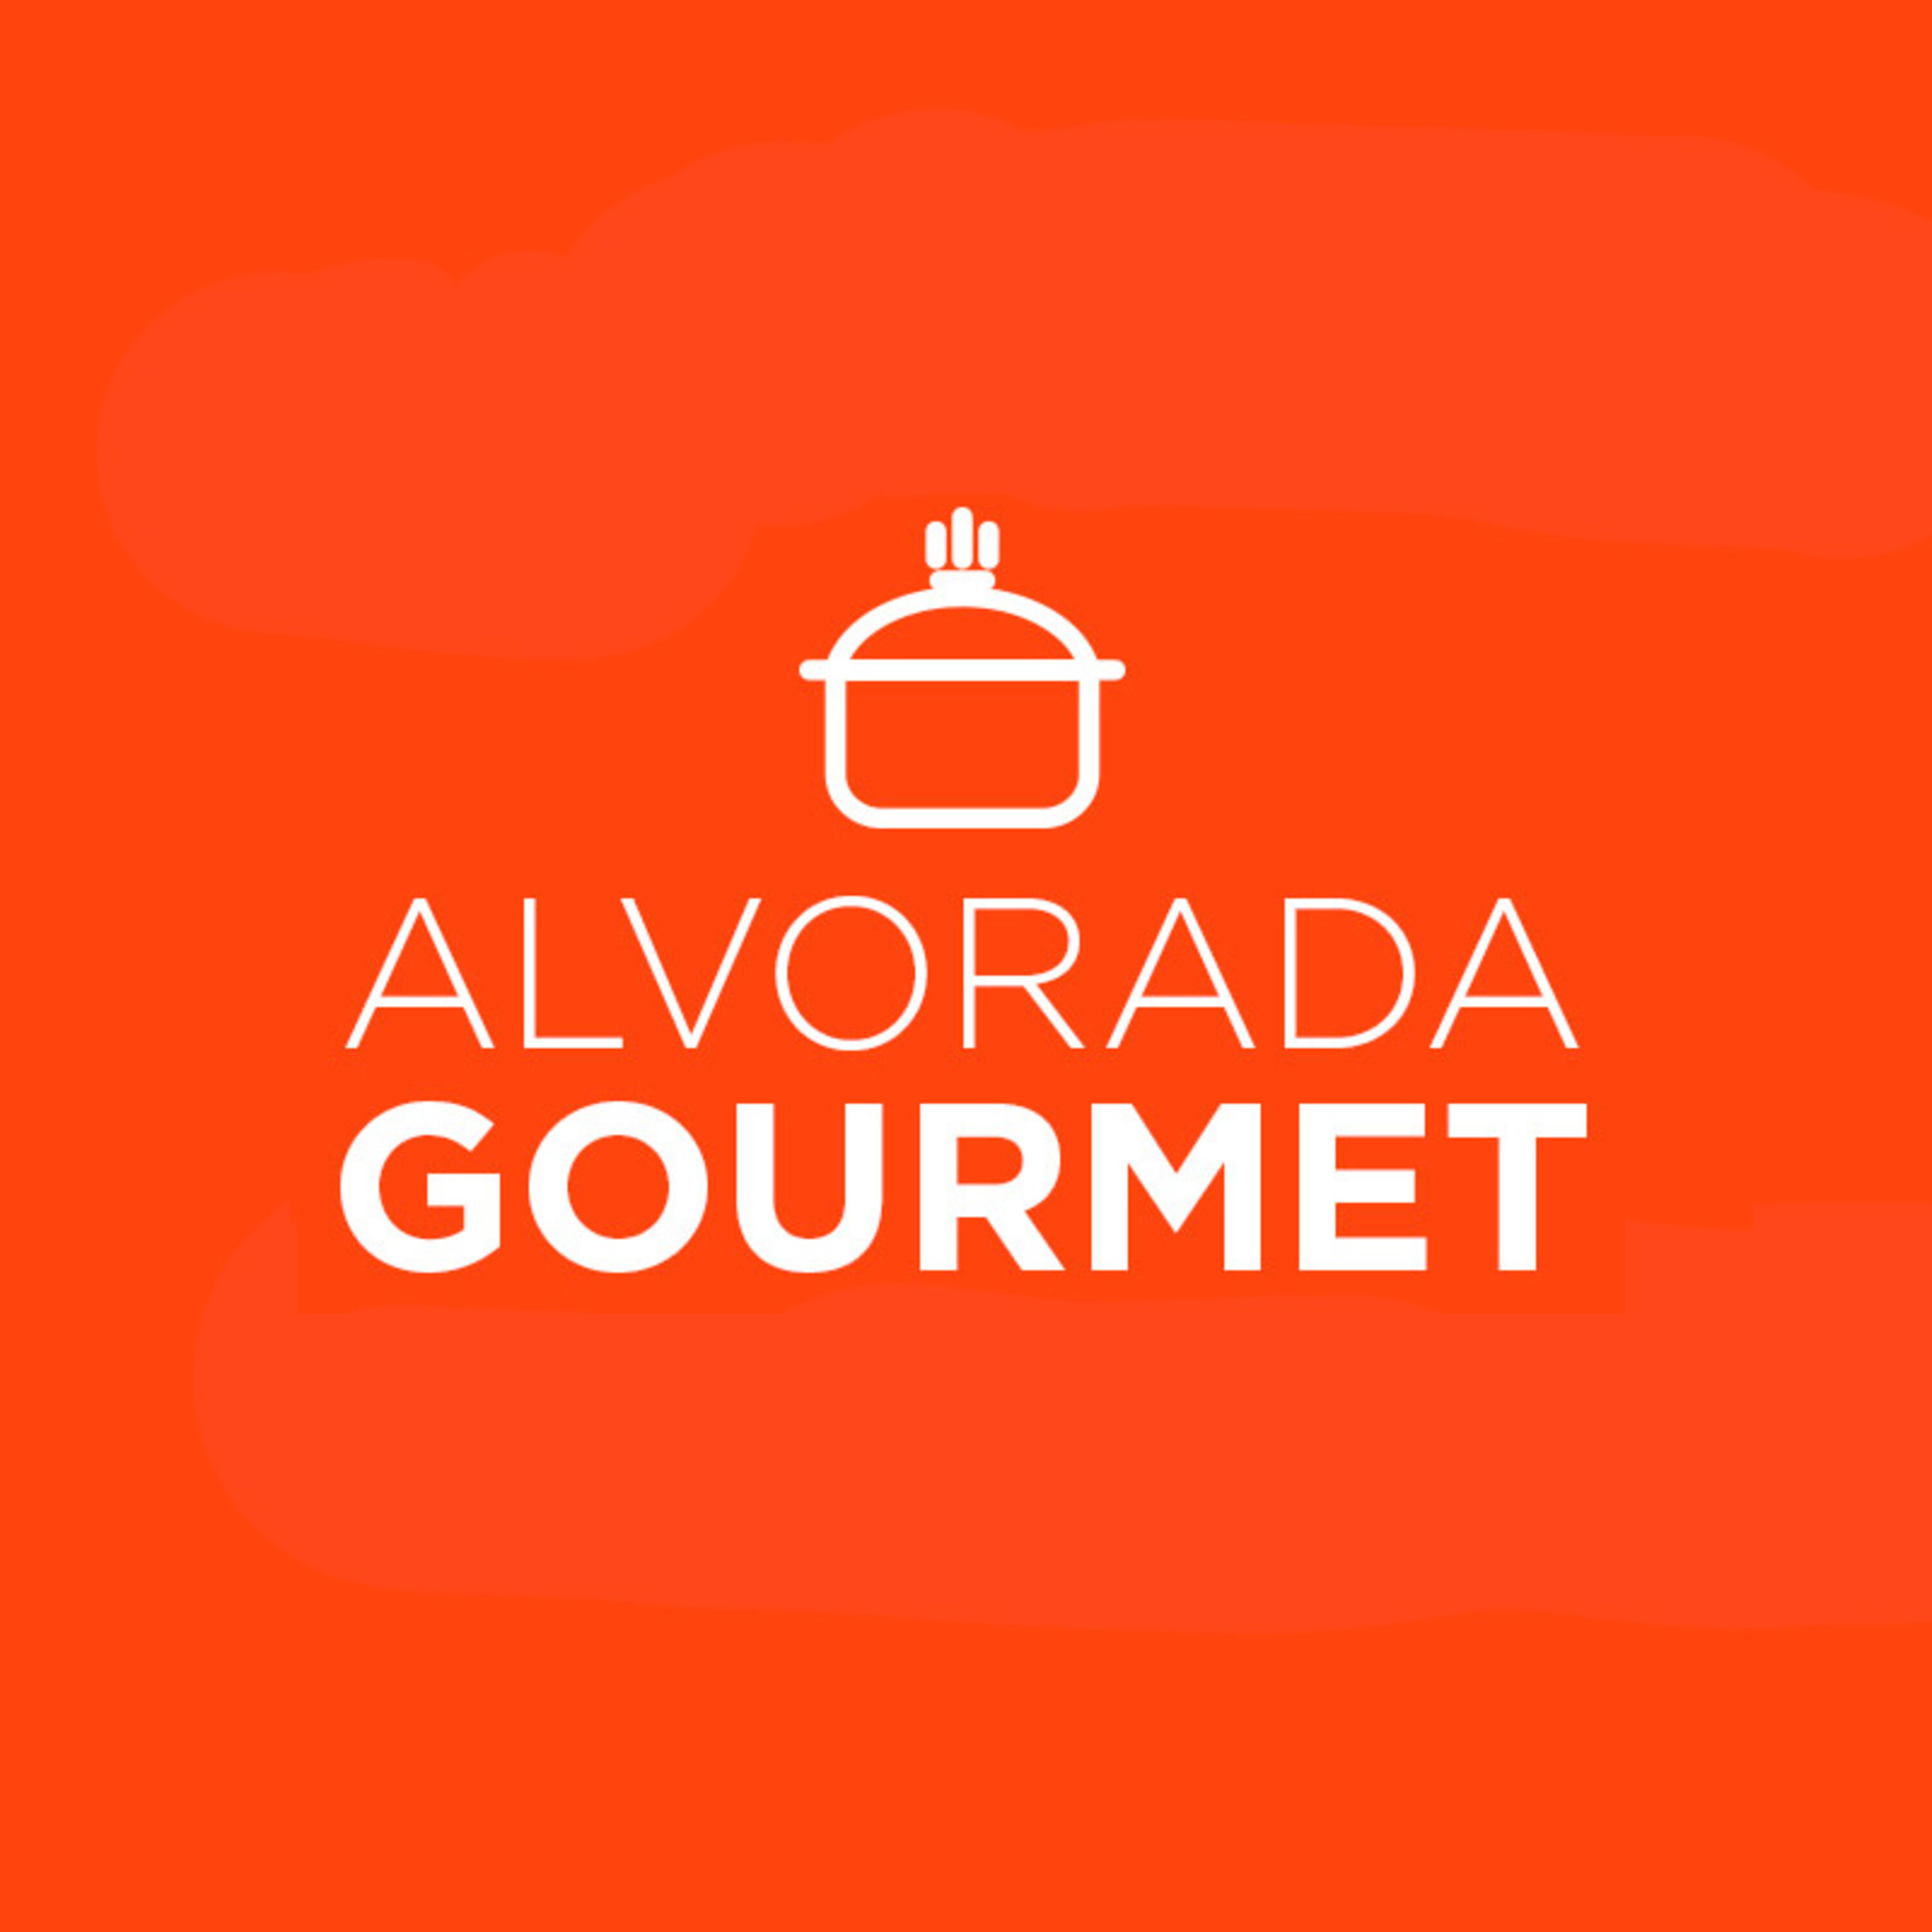 Alvorada Gourmet - Petiscos rápidos para curtir o Carnaval entre amigos